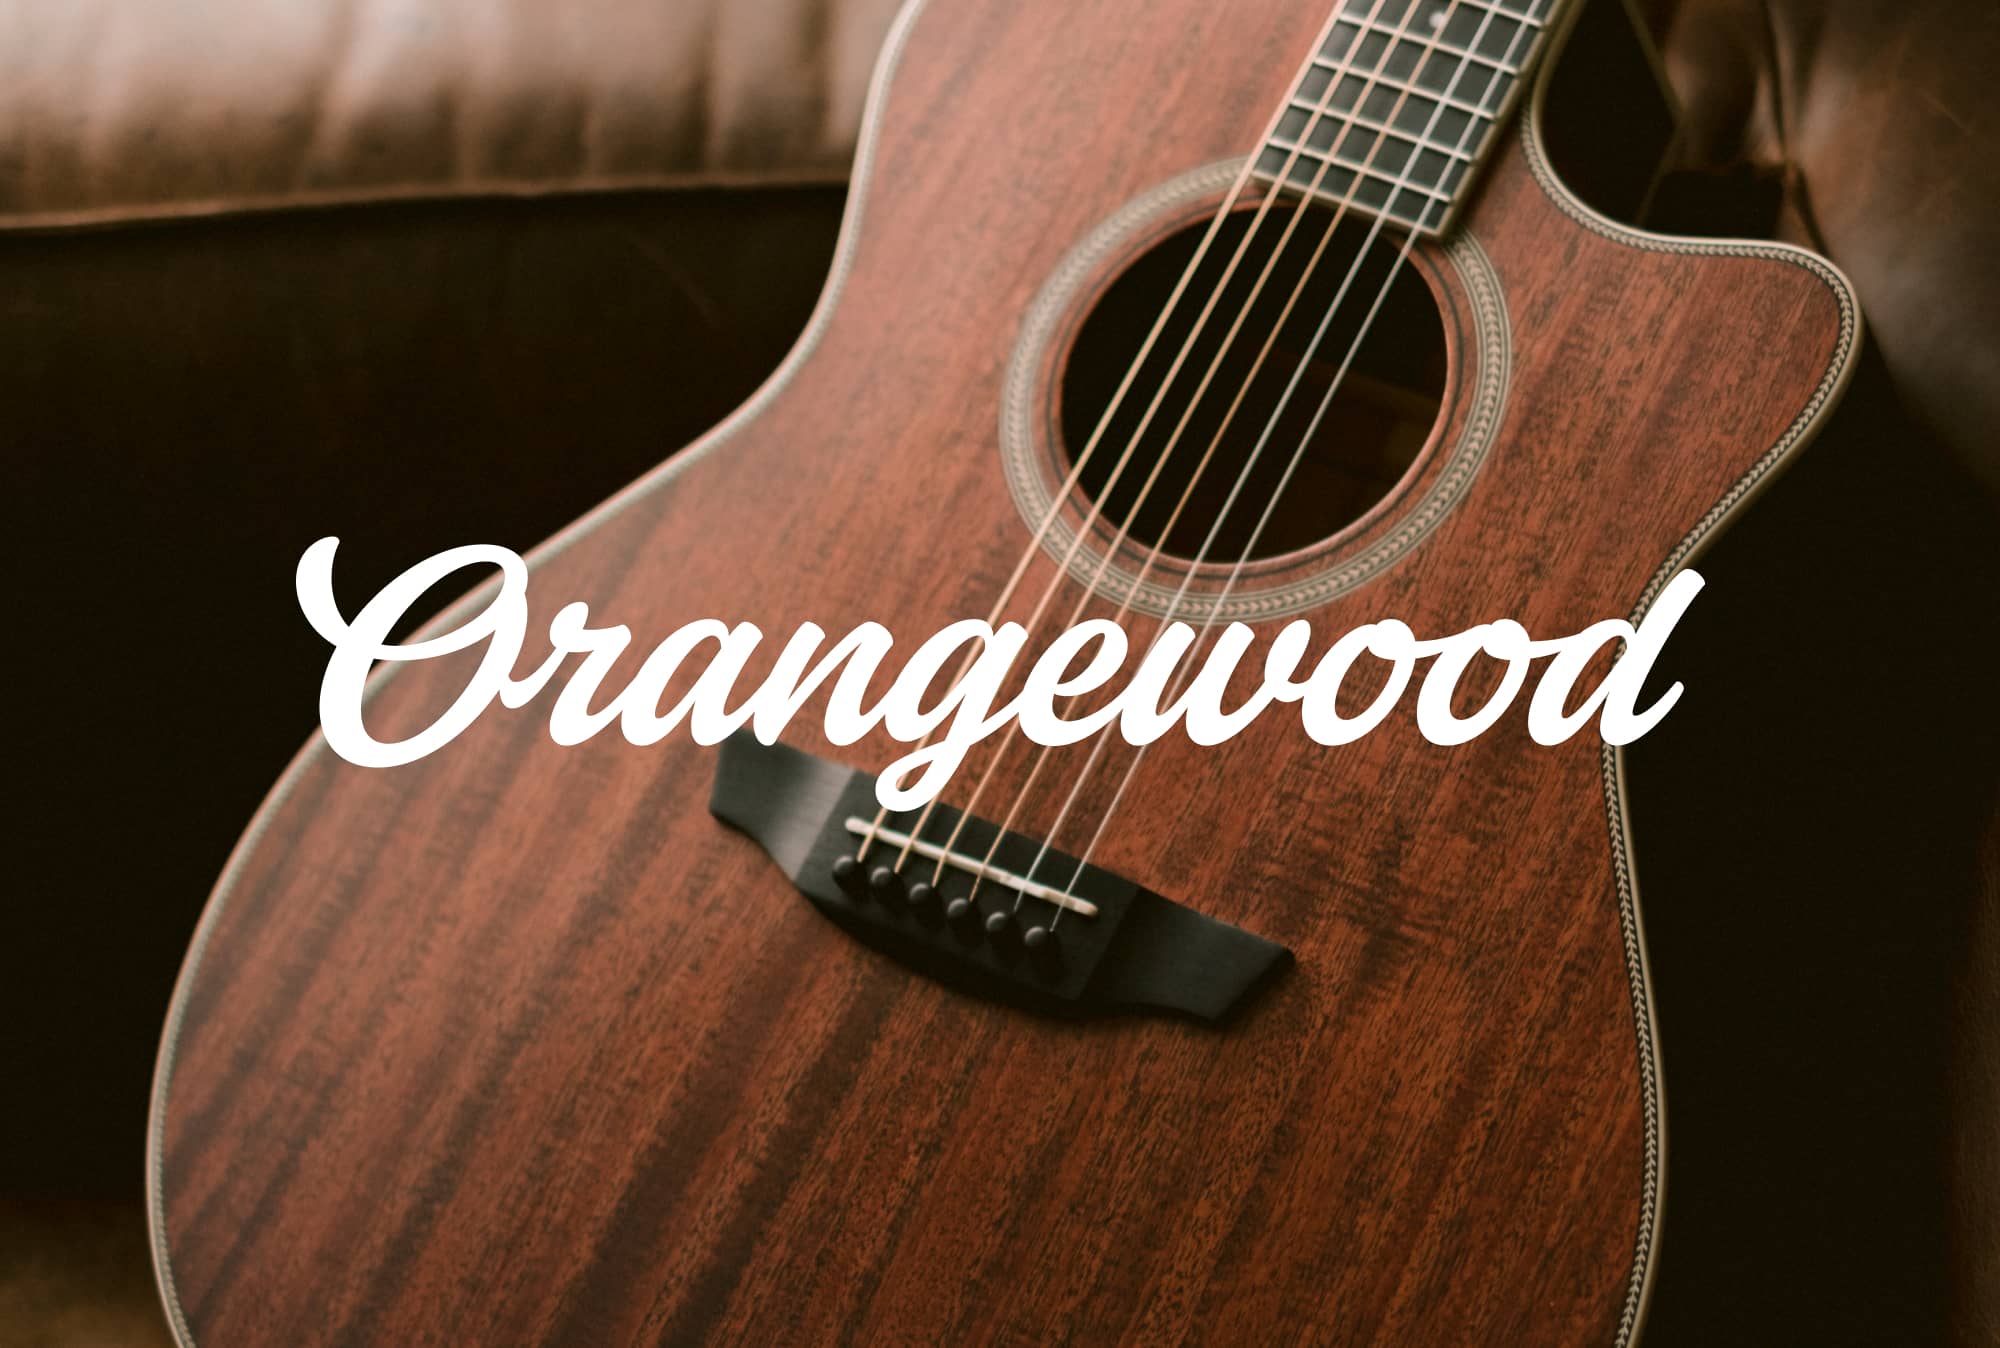 Sage mahogany guitar on a leather sofa with new orangewood logo overlaid